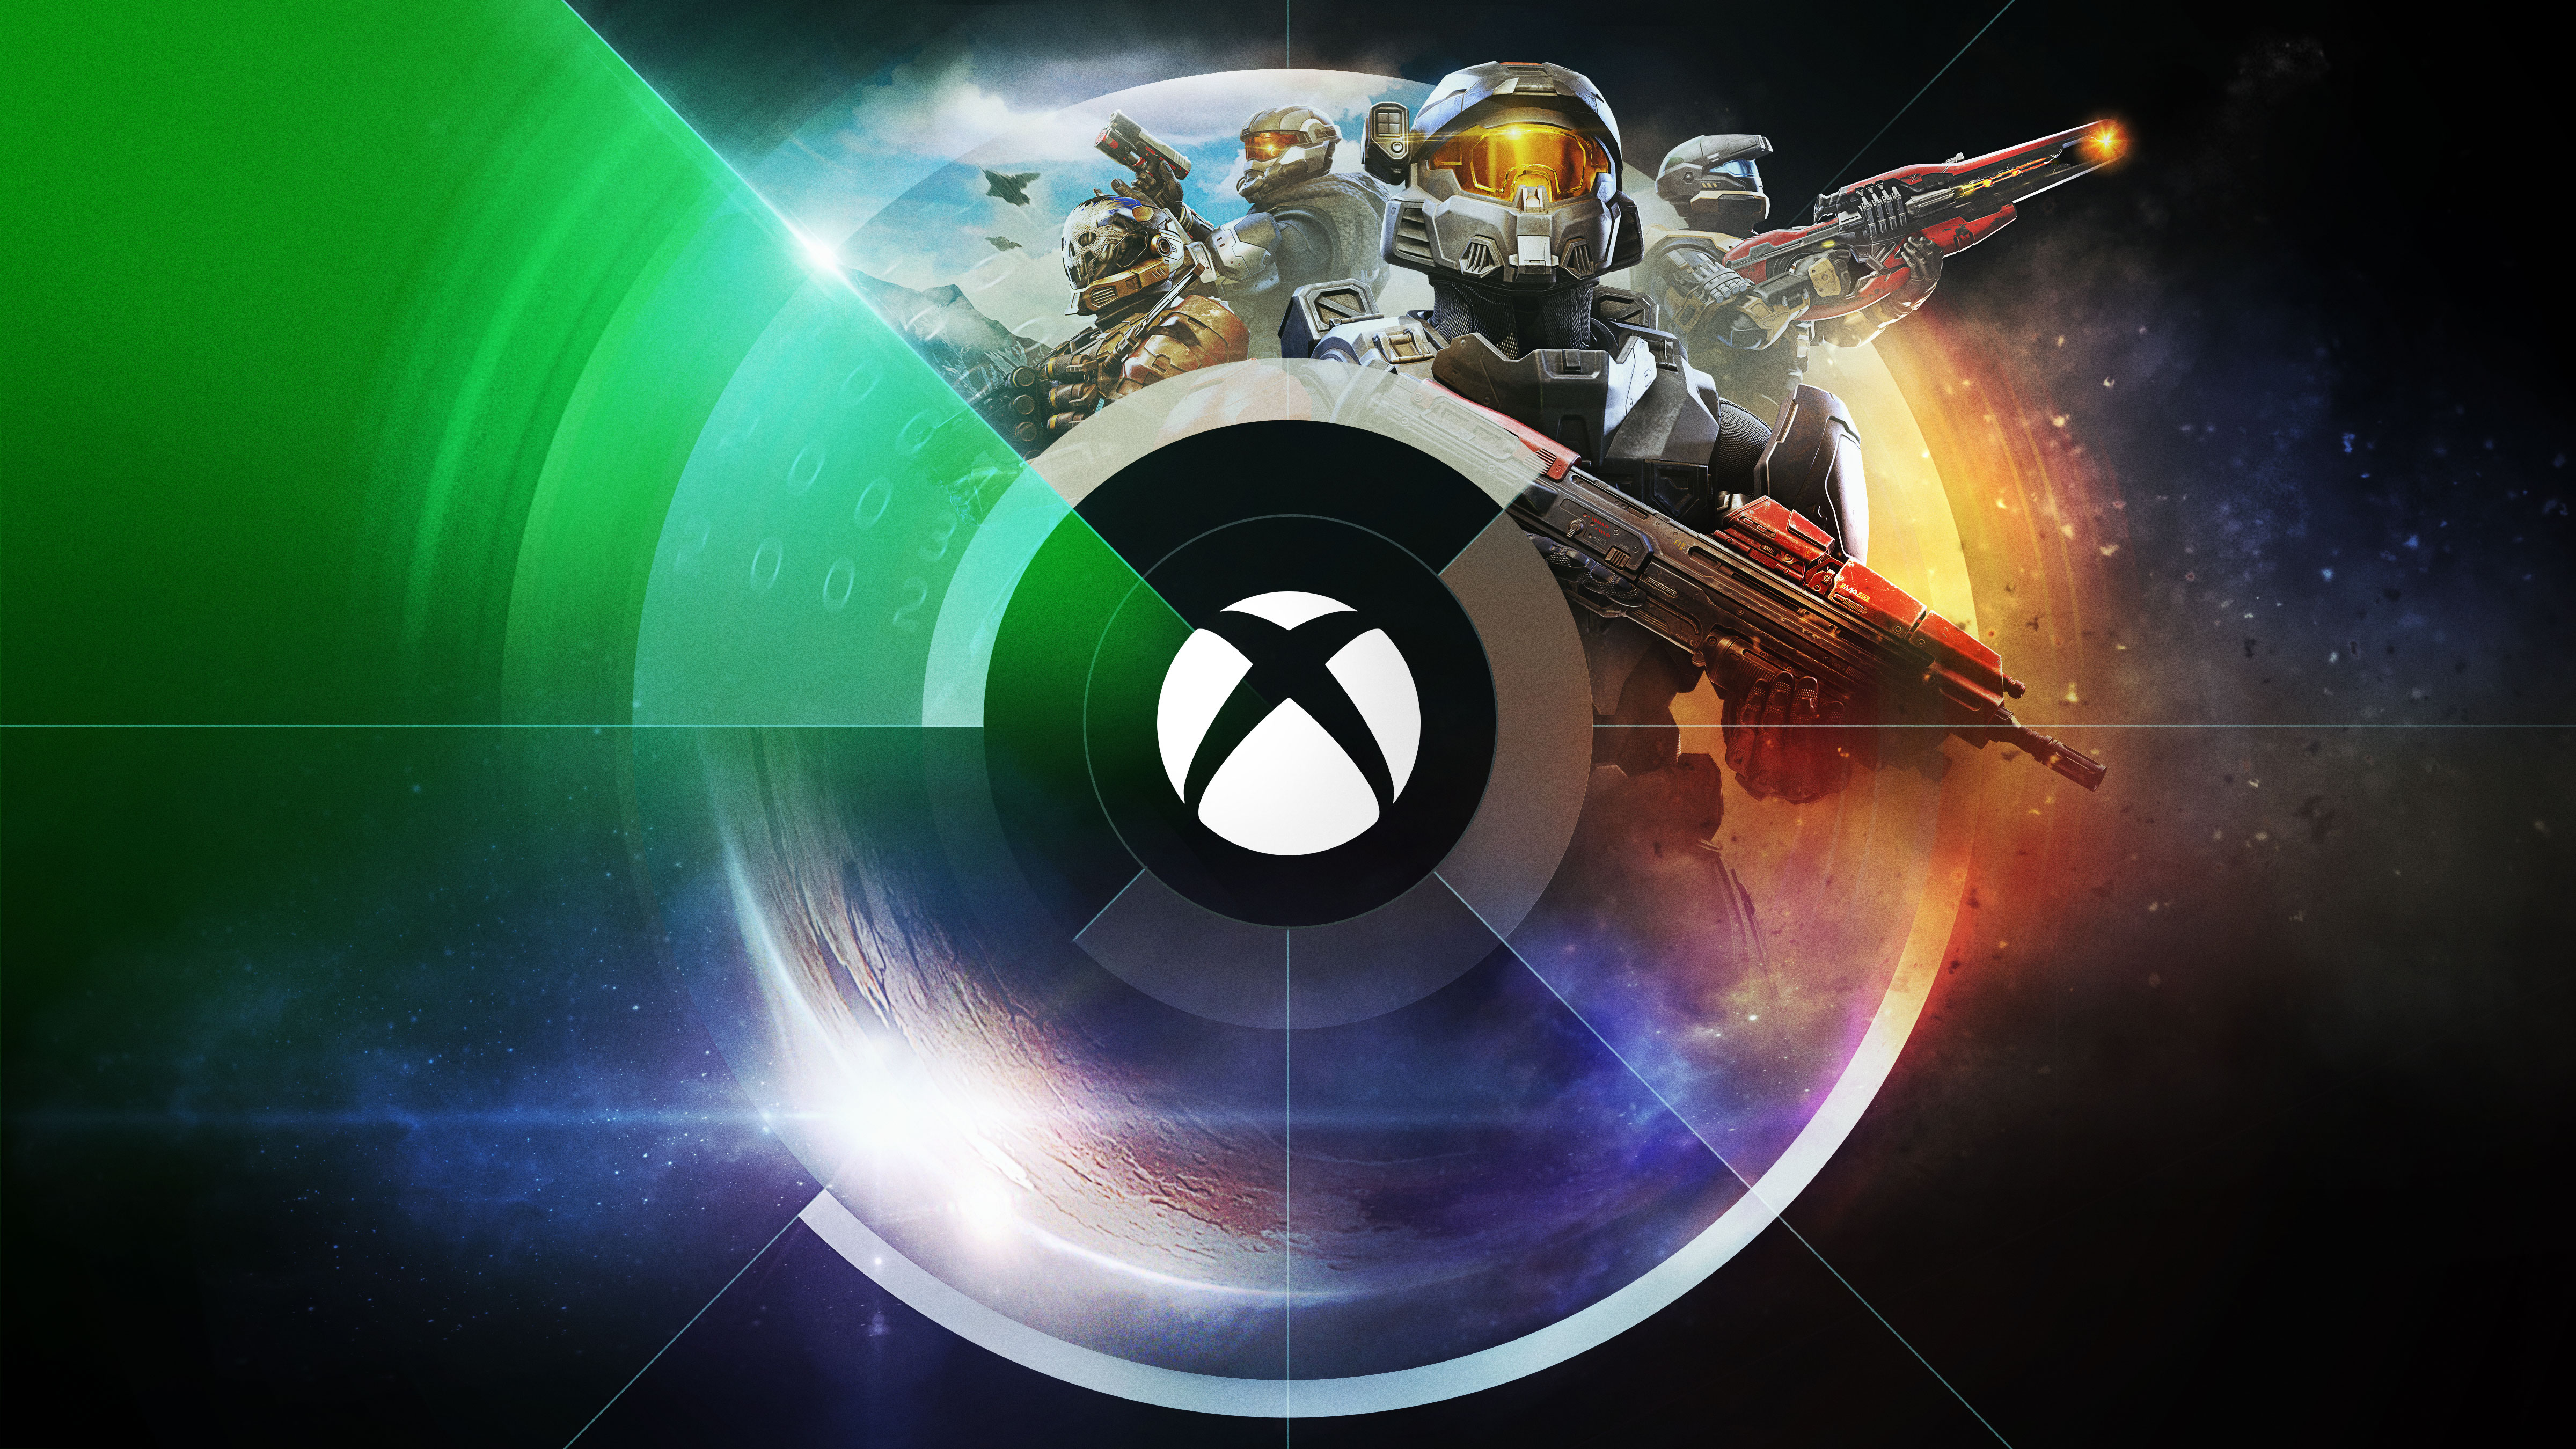 General 4800x2700 Xbox Xbox Game Studios Xbox One Xbox Serie X xbox series S Bethesda Softworks Halo Infinite space galaxy video games